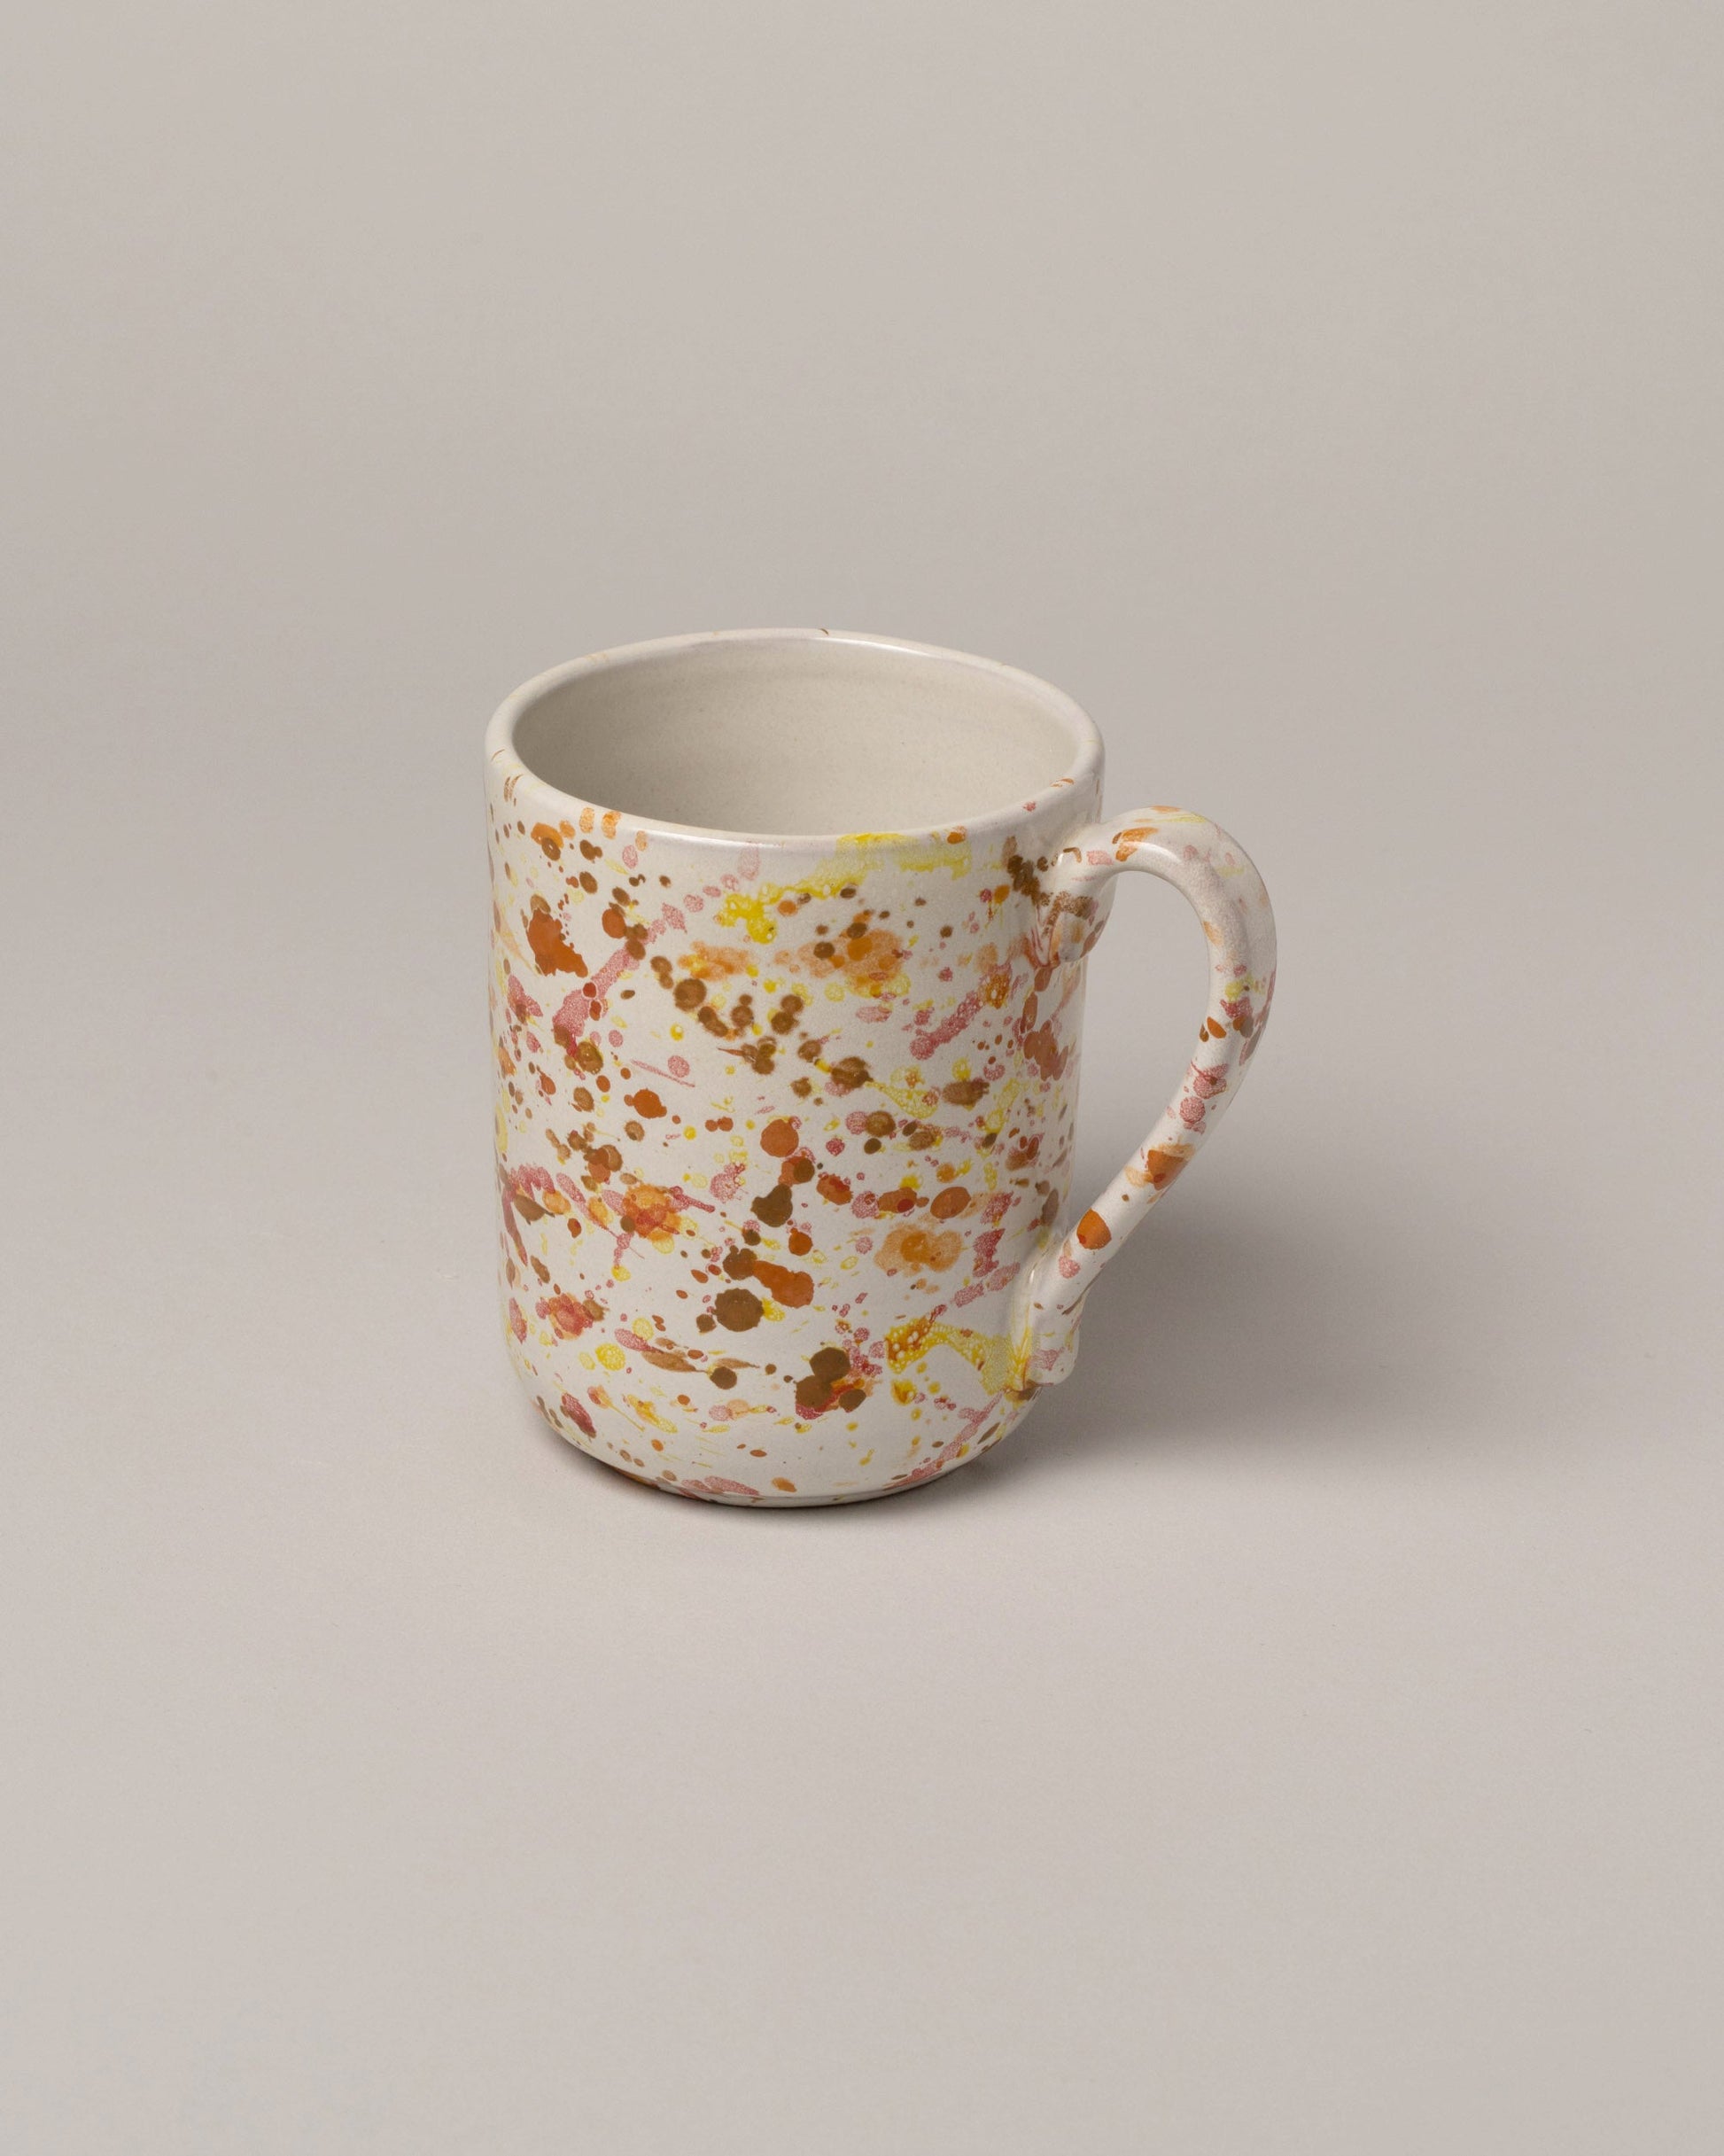  Coffee Mug on light color background.